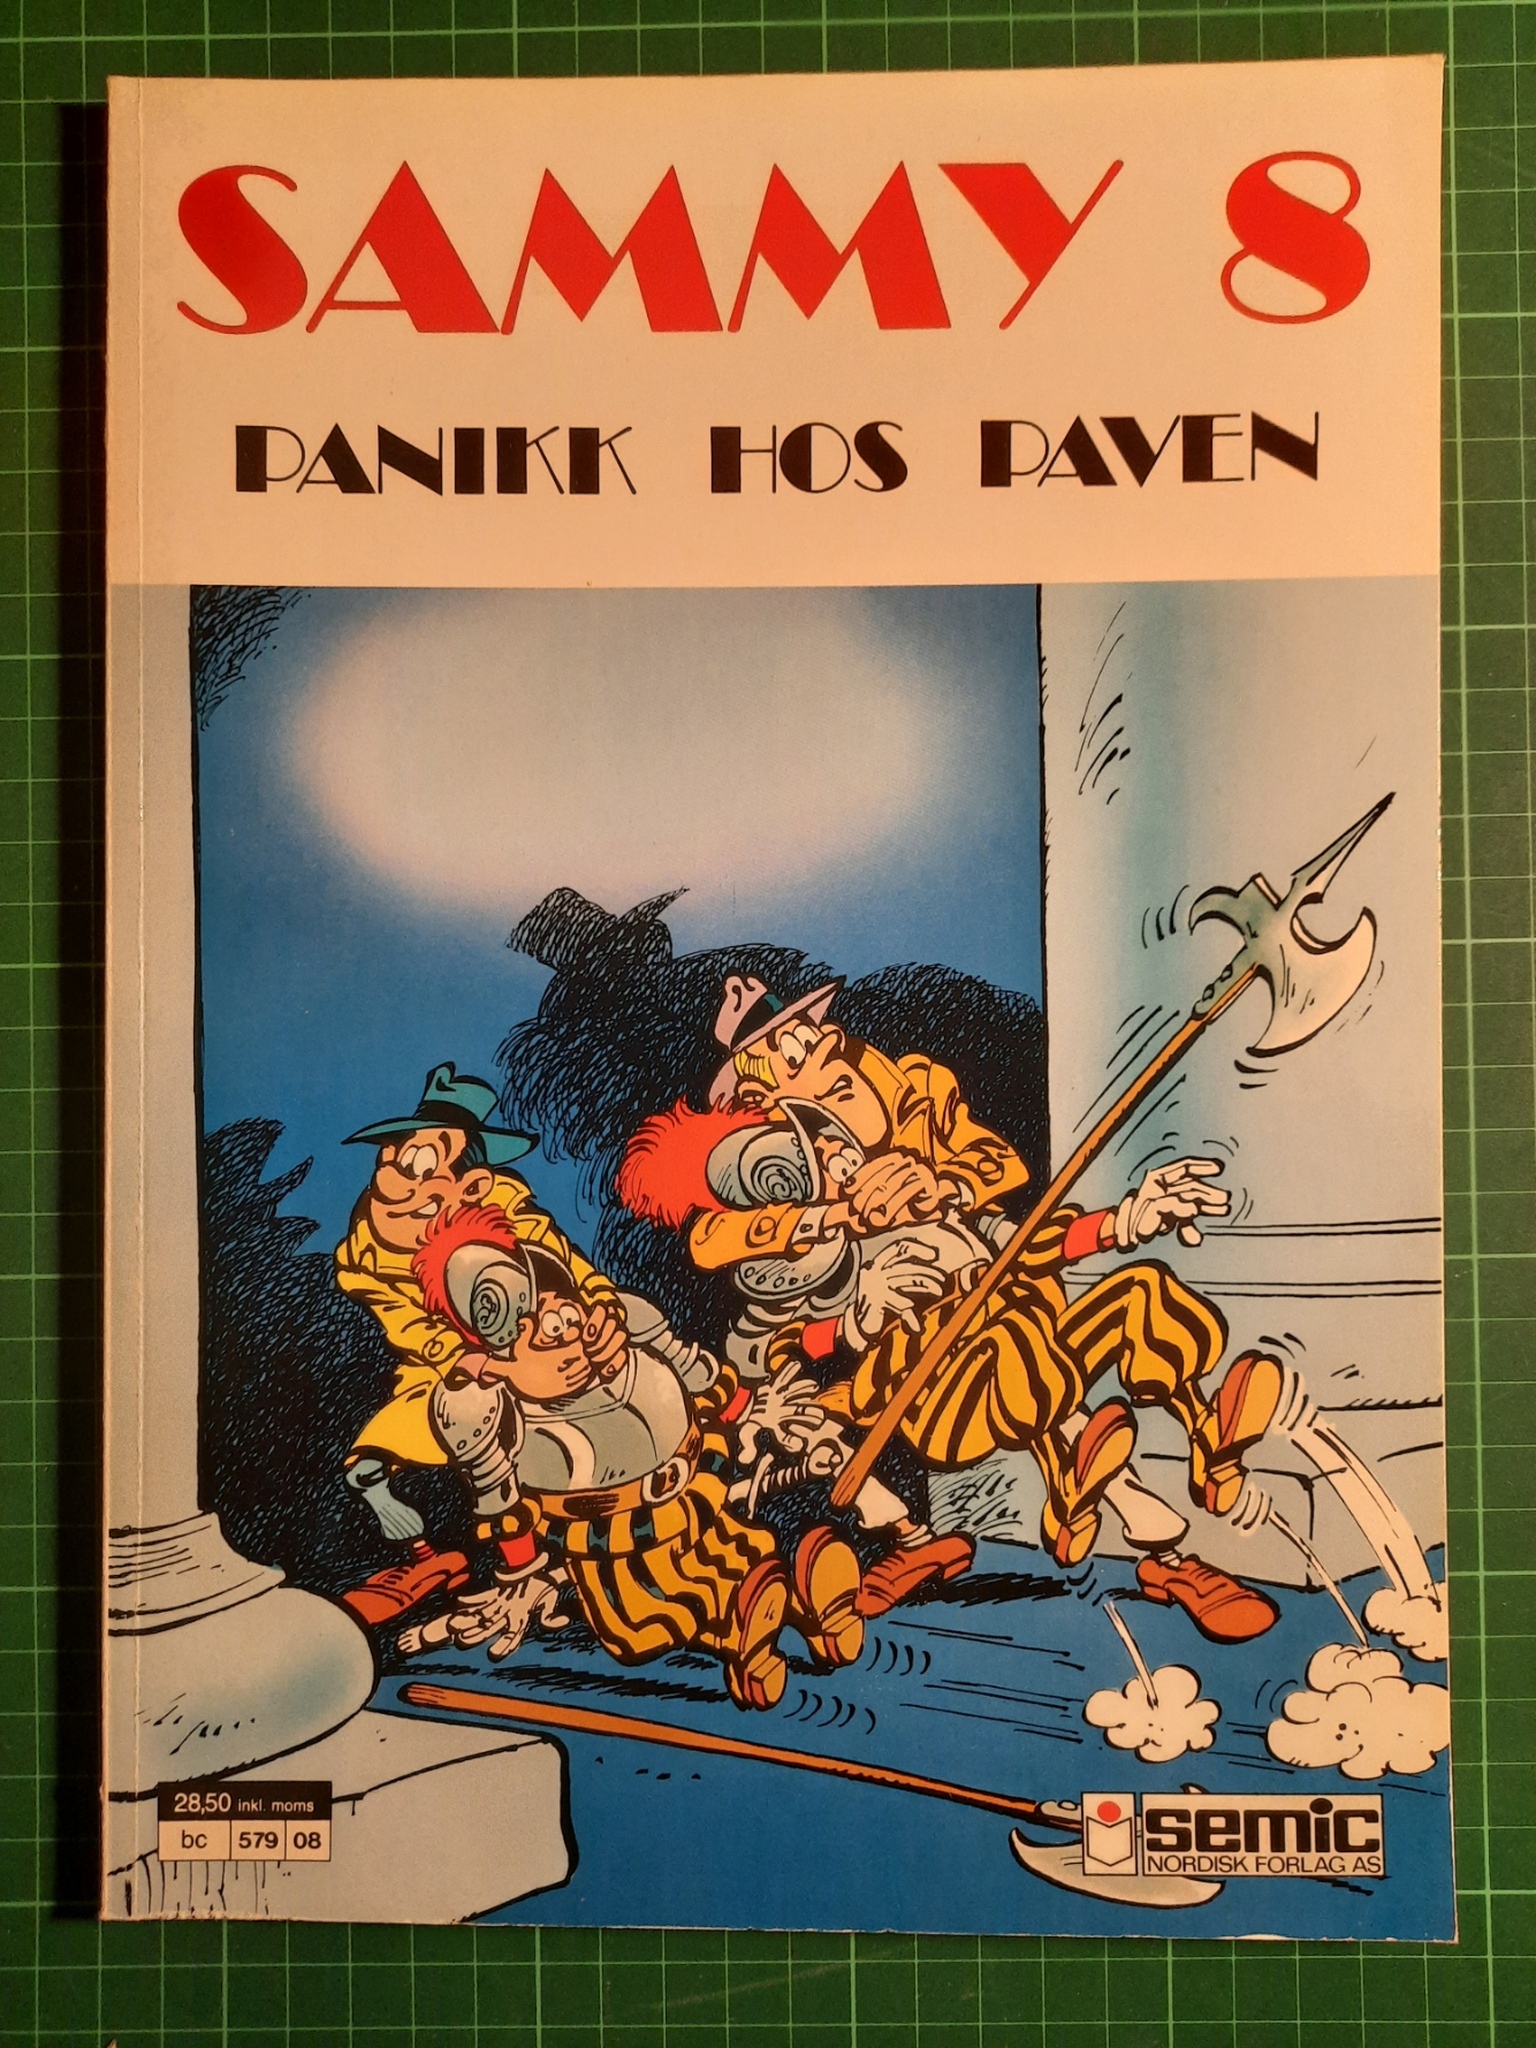 Sammy 08 : Panik hos paven